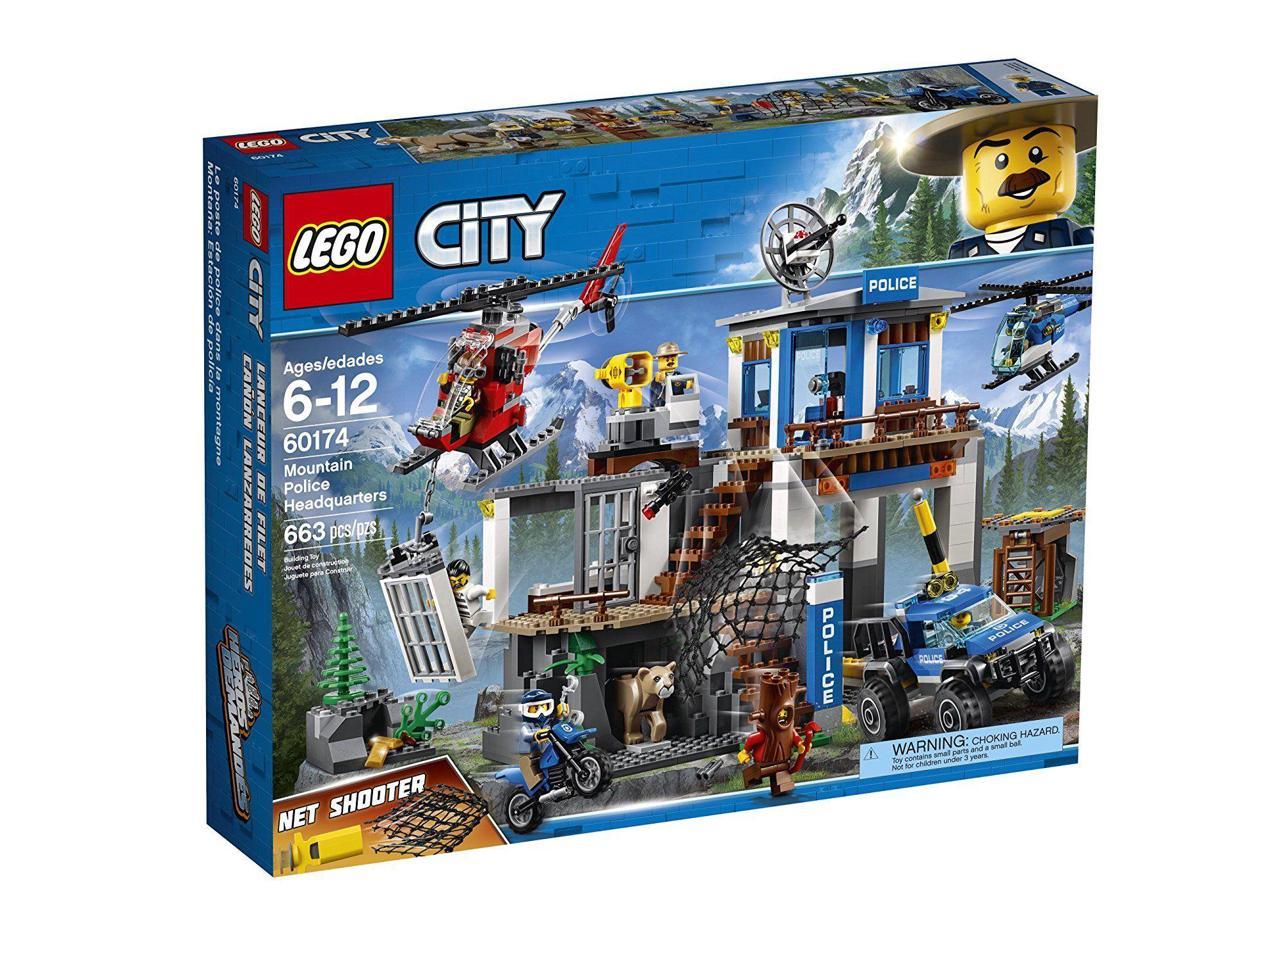 ☀️NEW Lego City Minifig BLUE SKATEBOARD Boy/Girl Minifigure Skate Board Toy 